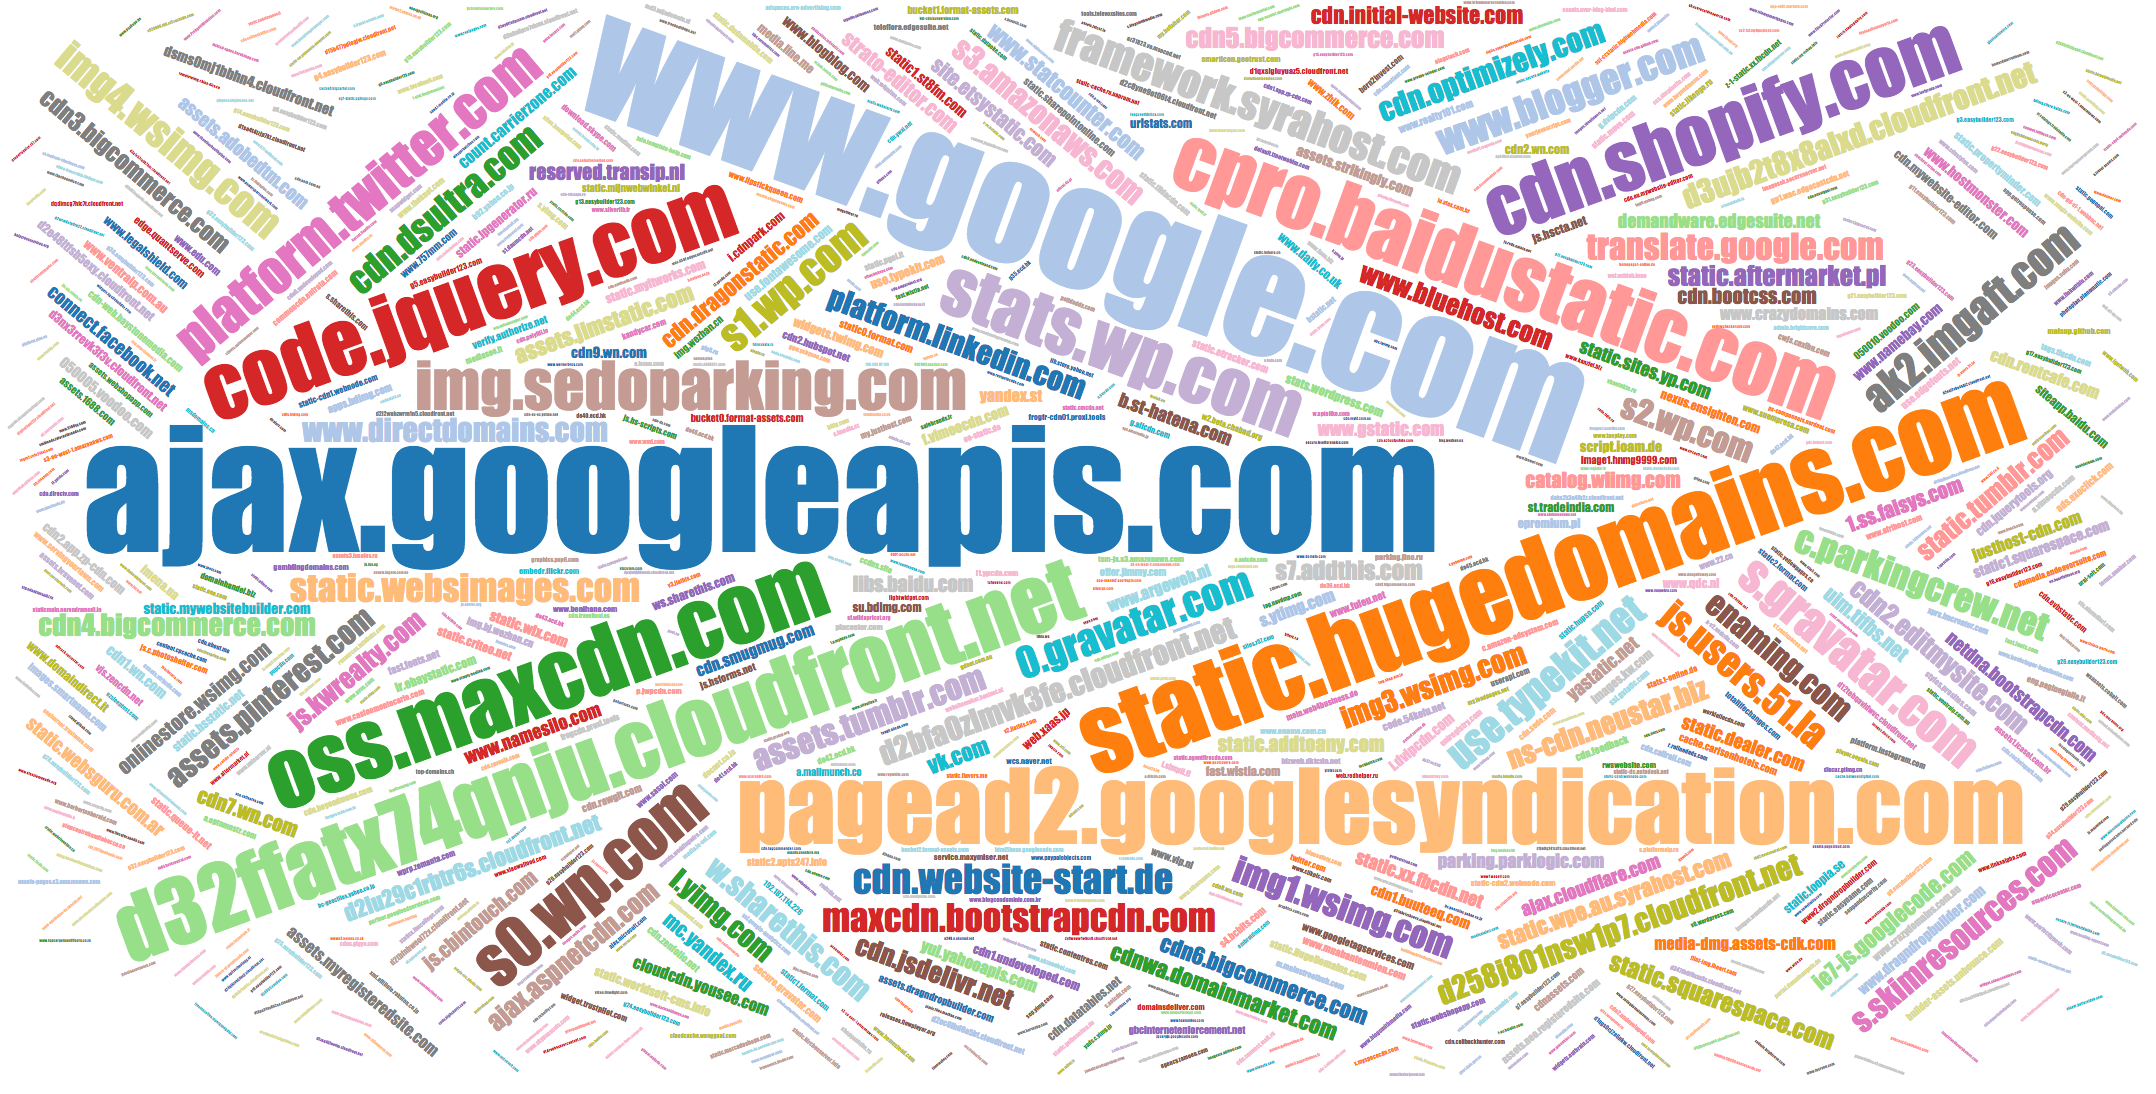 Popular names of JS domains x.myspacecdn.com, xml.affiliate.rakuten.co.jp, etc.